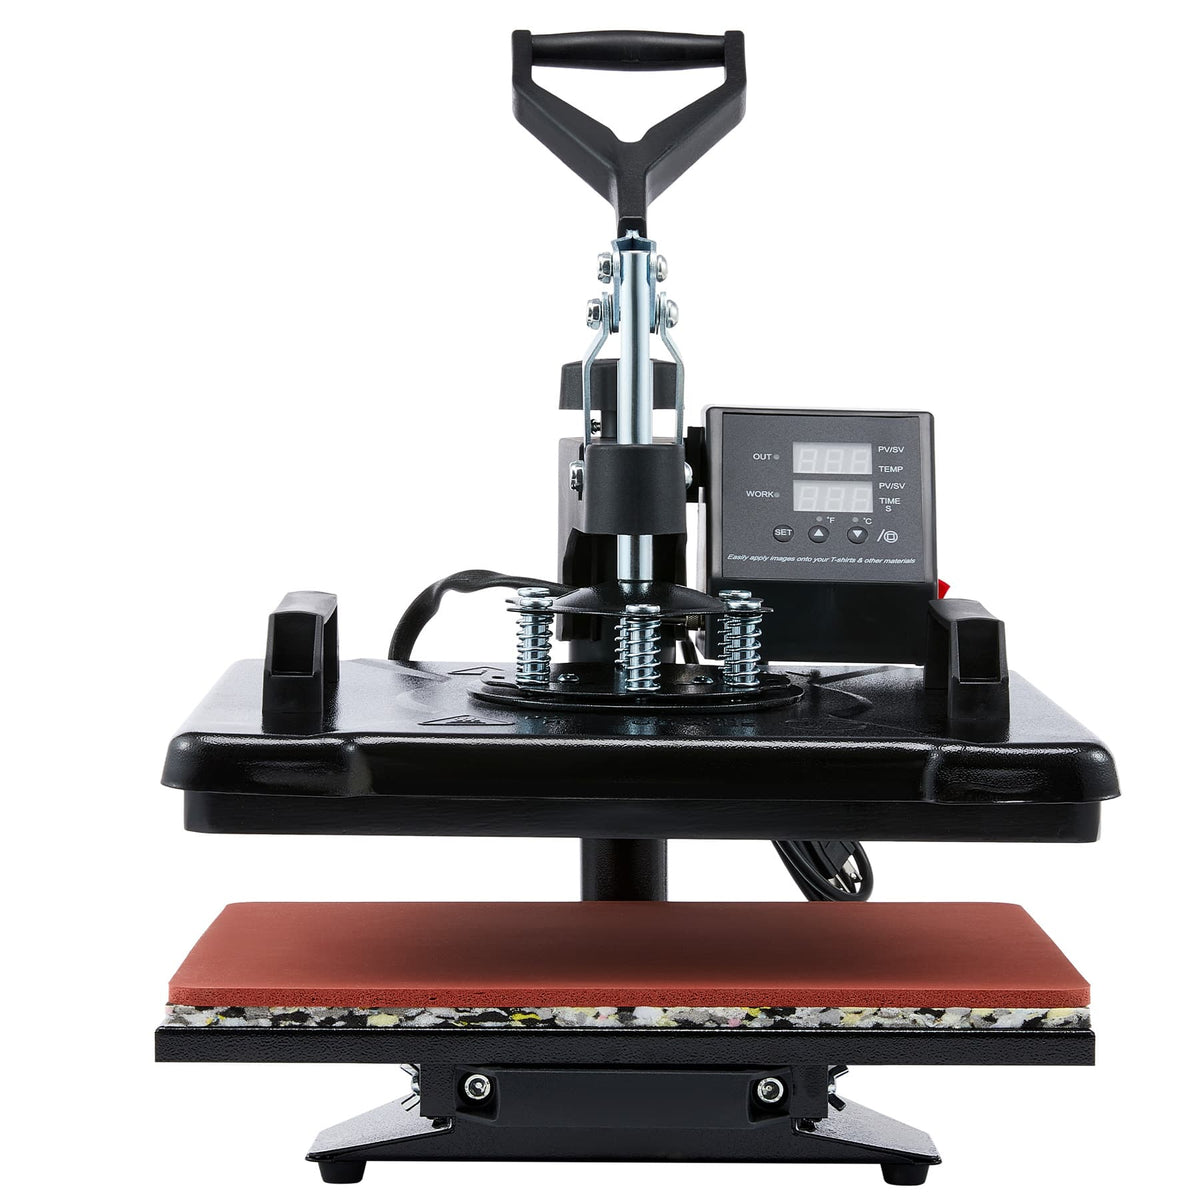  CREWORKS 12x10 Inch Heat Press Machine Professional